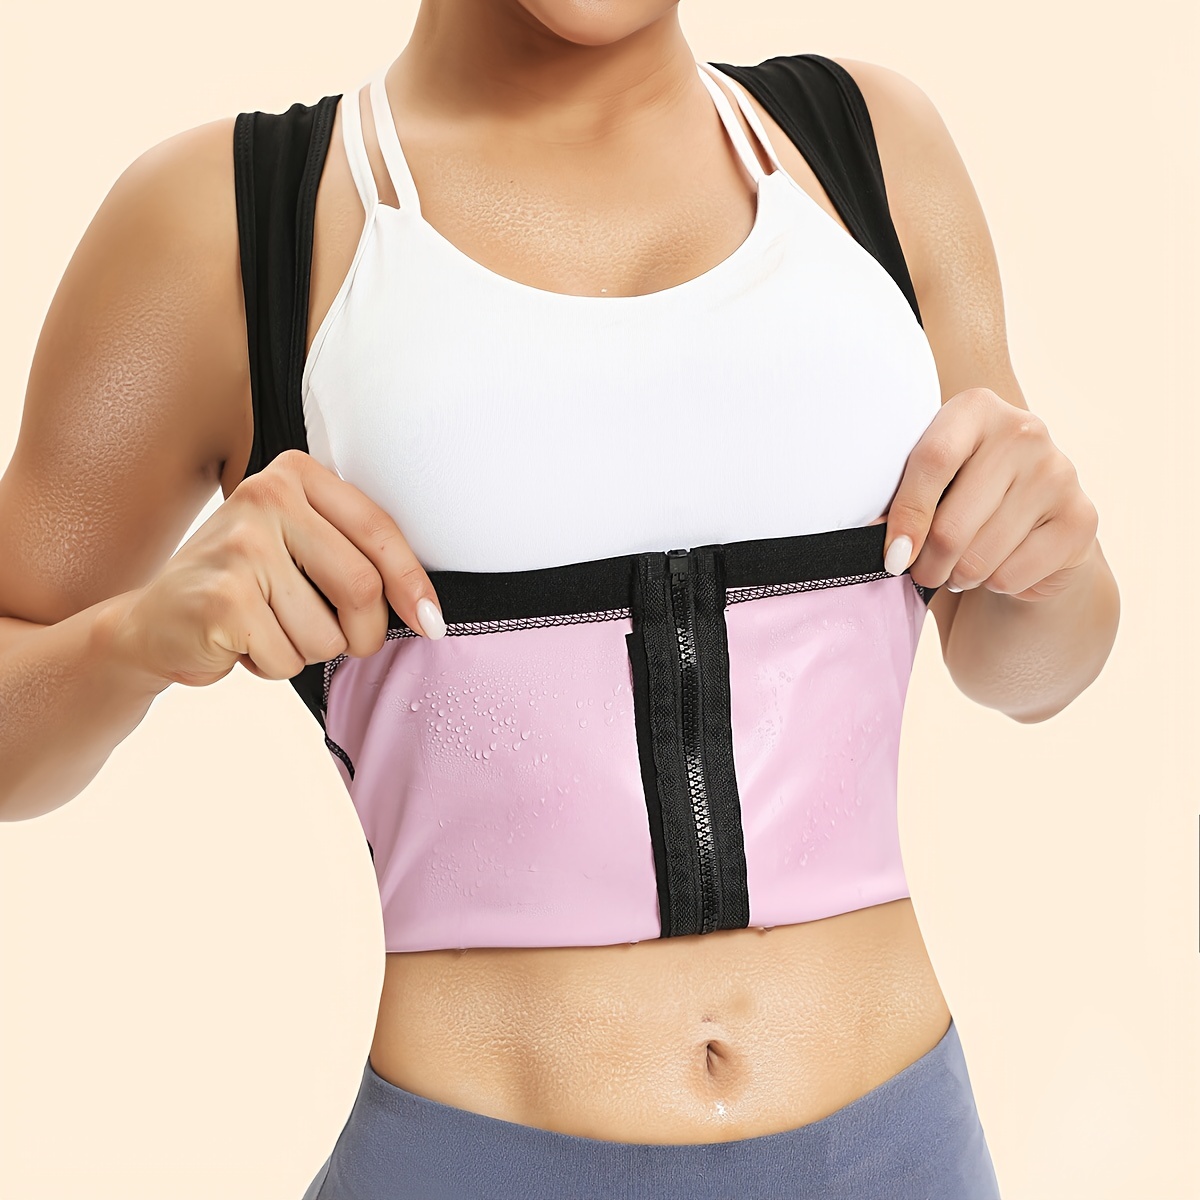 Sauna Suit For Women, Waist Trainer With Zipper, Workout Sweatband, Waist  Trimmer, Tummy Control For Body Shaper